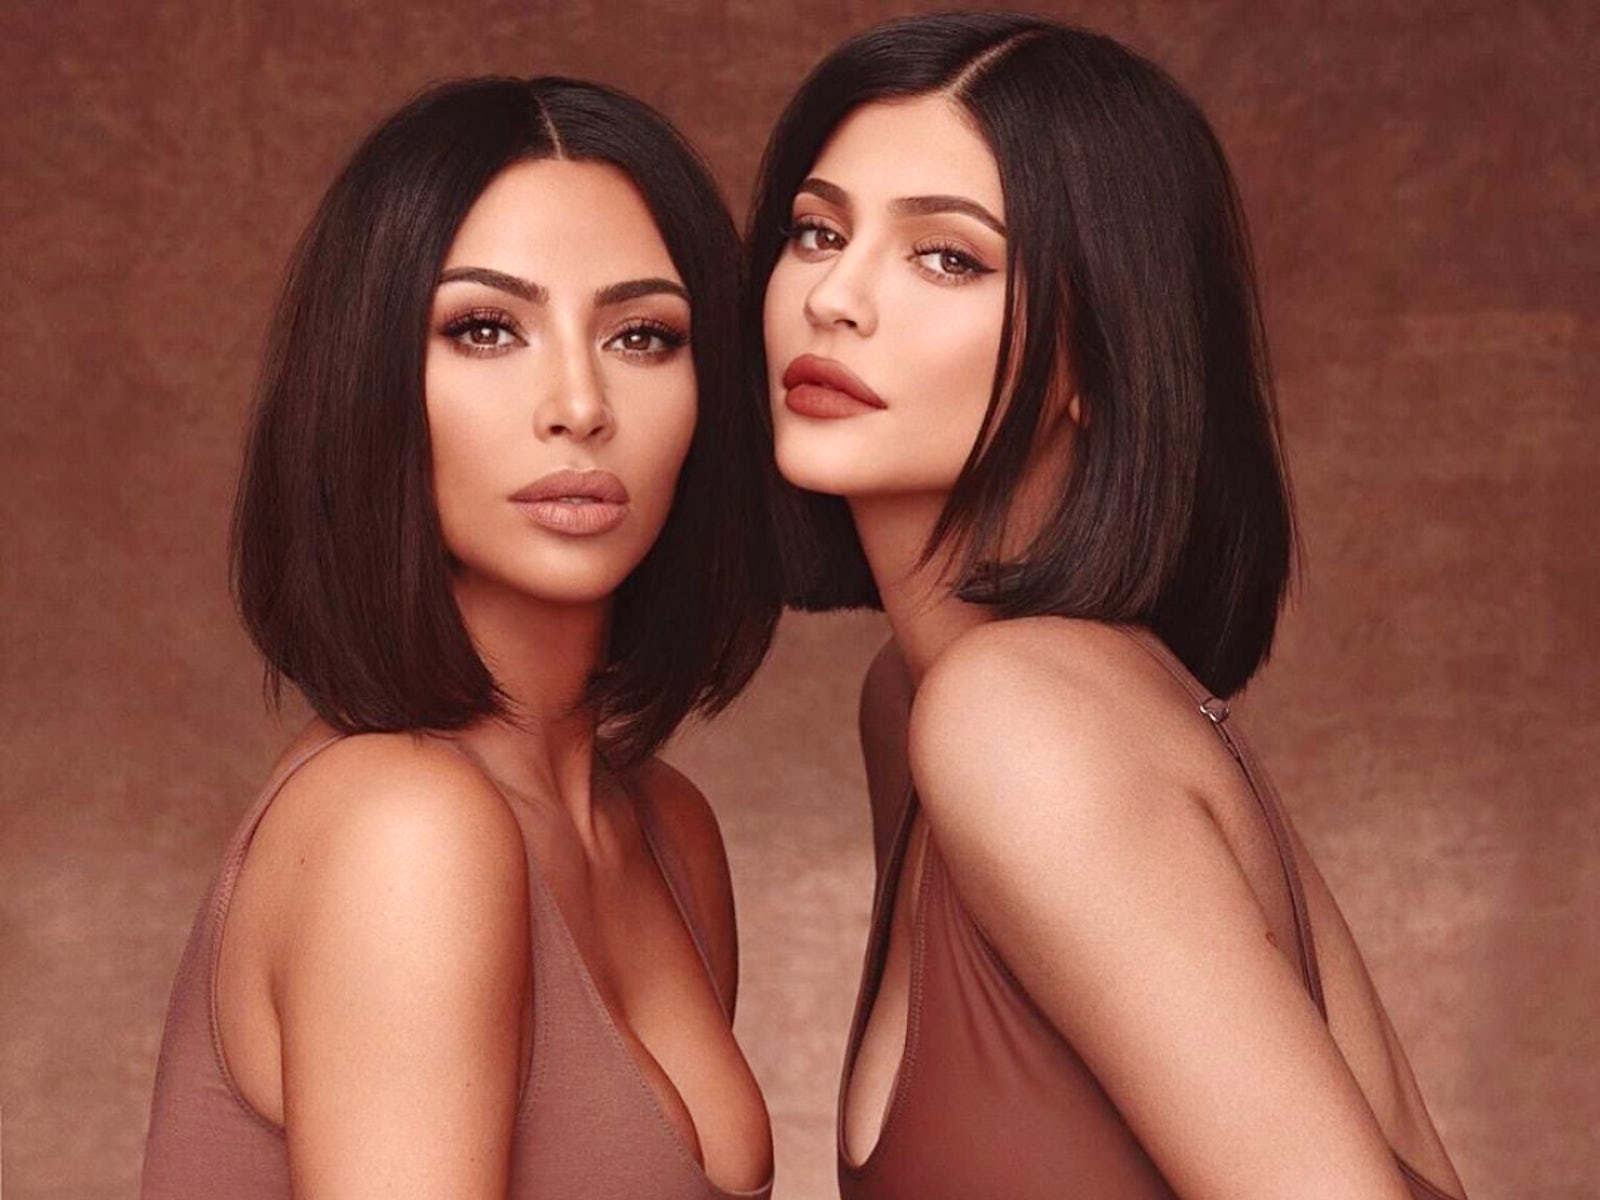 Kim Kardashian and Kylie Jenner wear matching looks in makeup promo